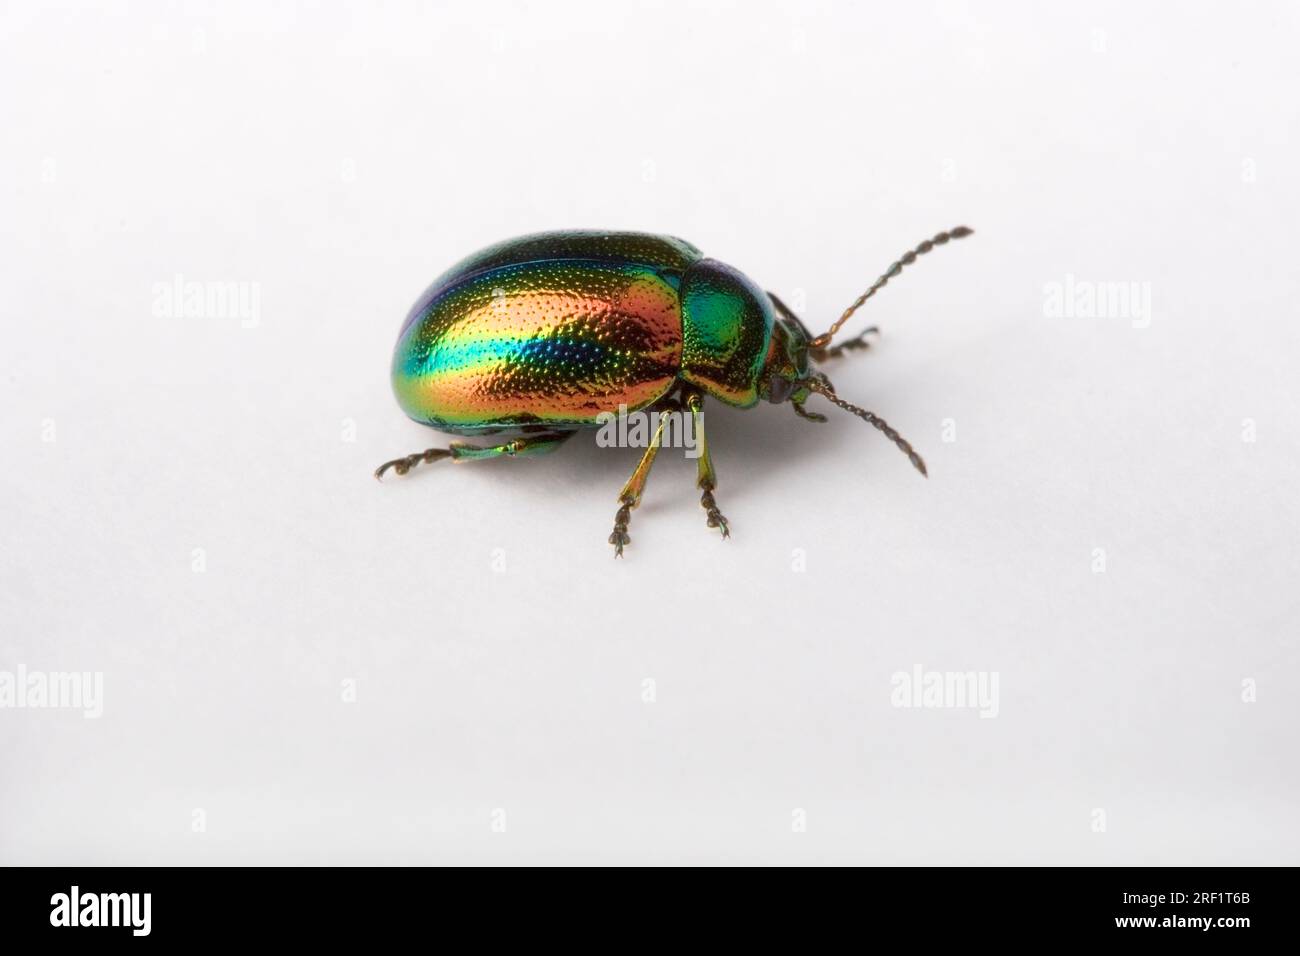 Oval-eyed leaf beetle (Chrysolina fastuosa), Germany Stock Photo